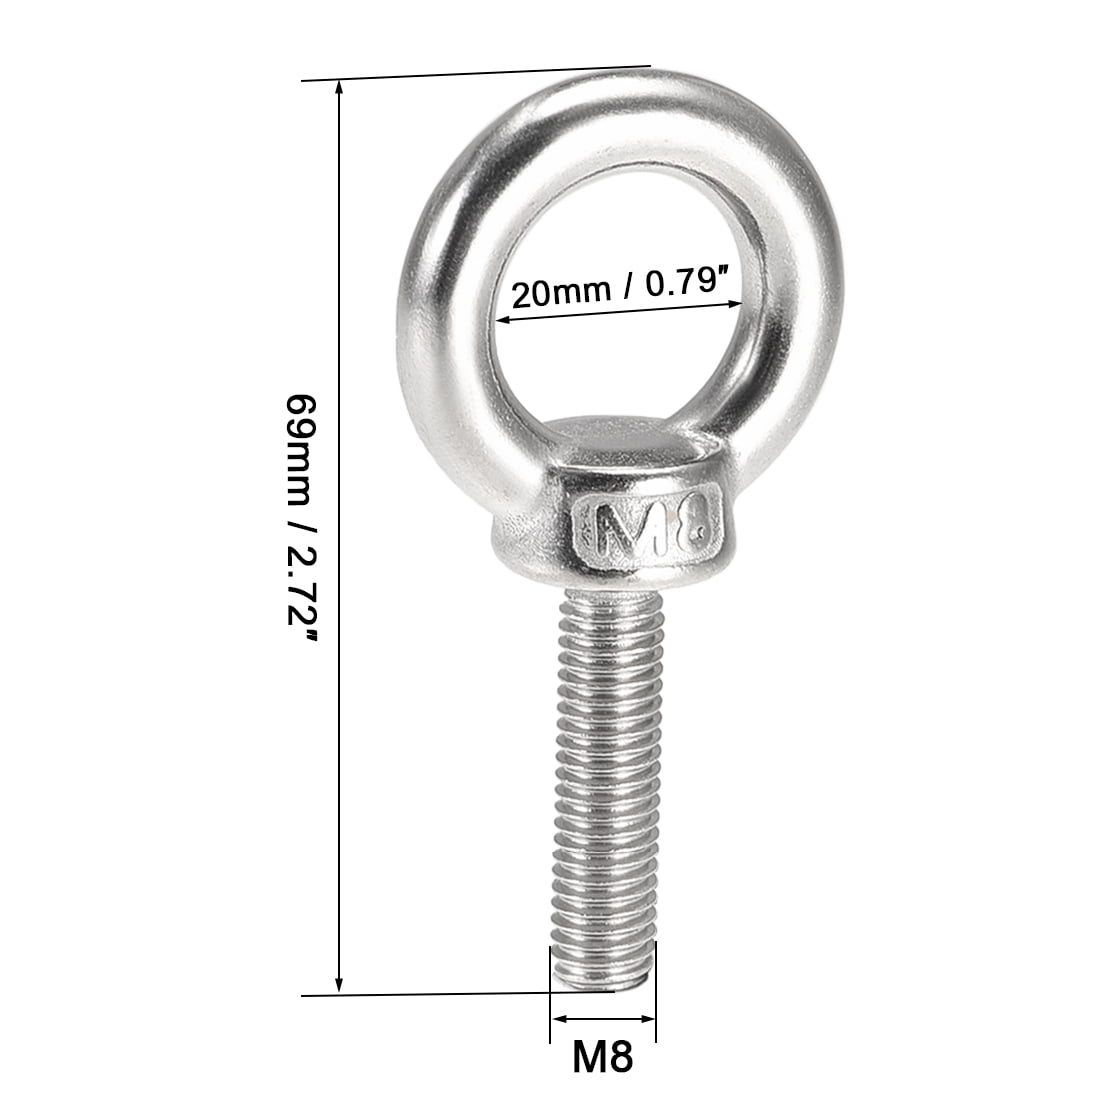 boeray 10pcs M8 Plum Blossom Shape Thumb Screw Nut Threaded Knurled Grip Knobs for Machinery Latche 